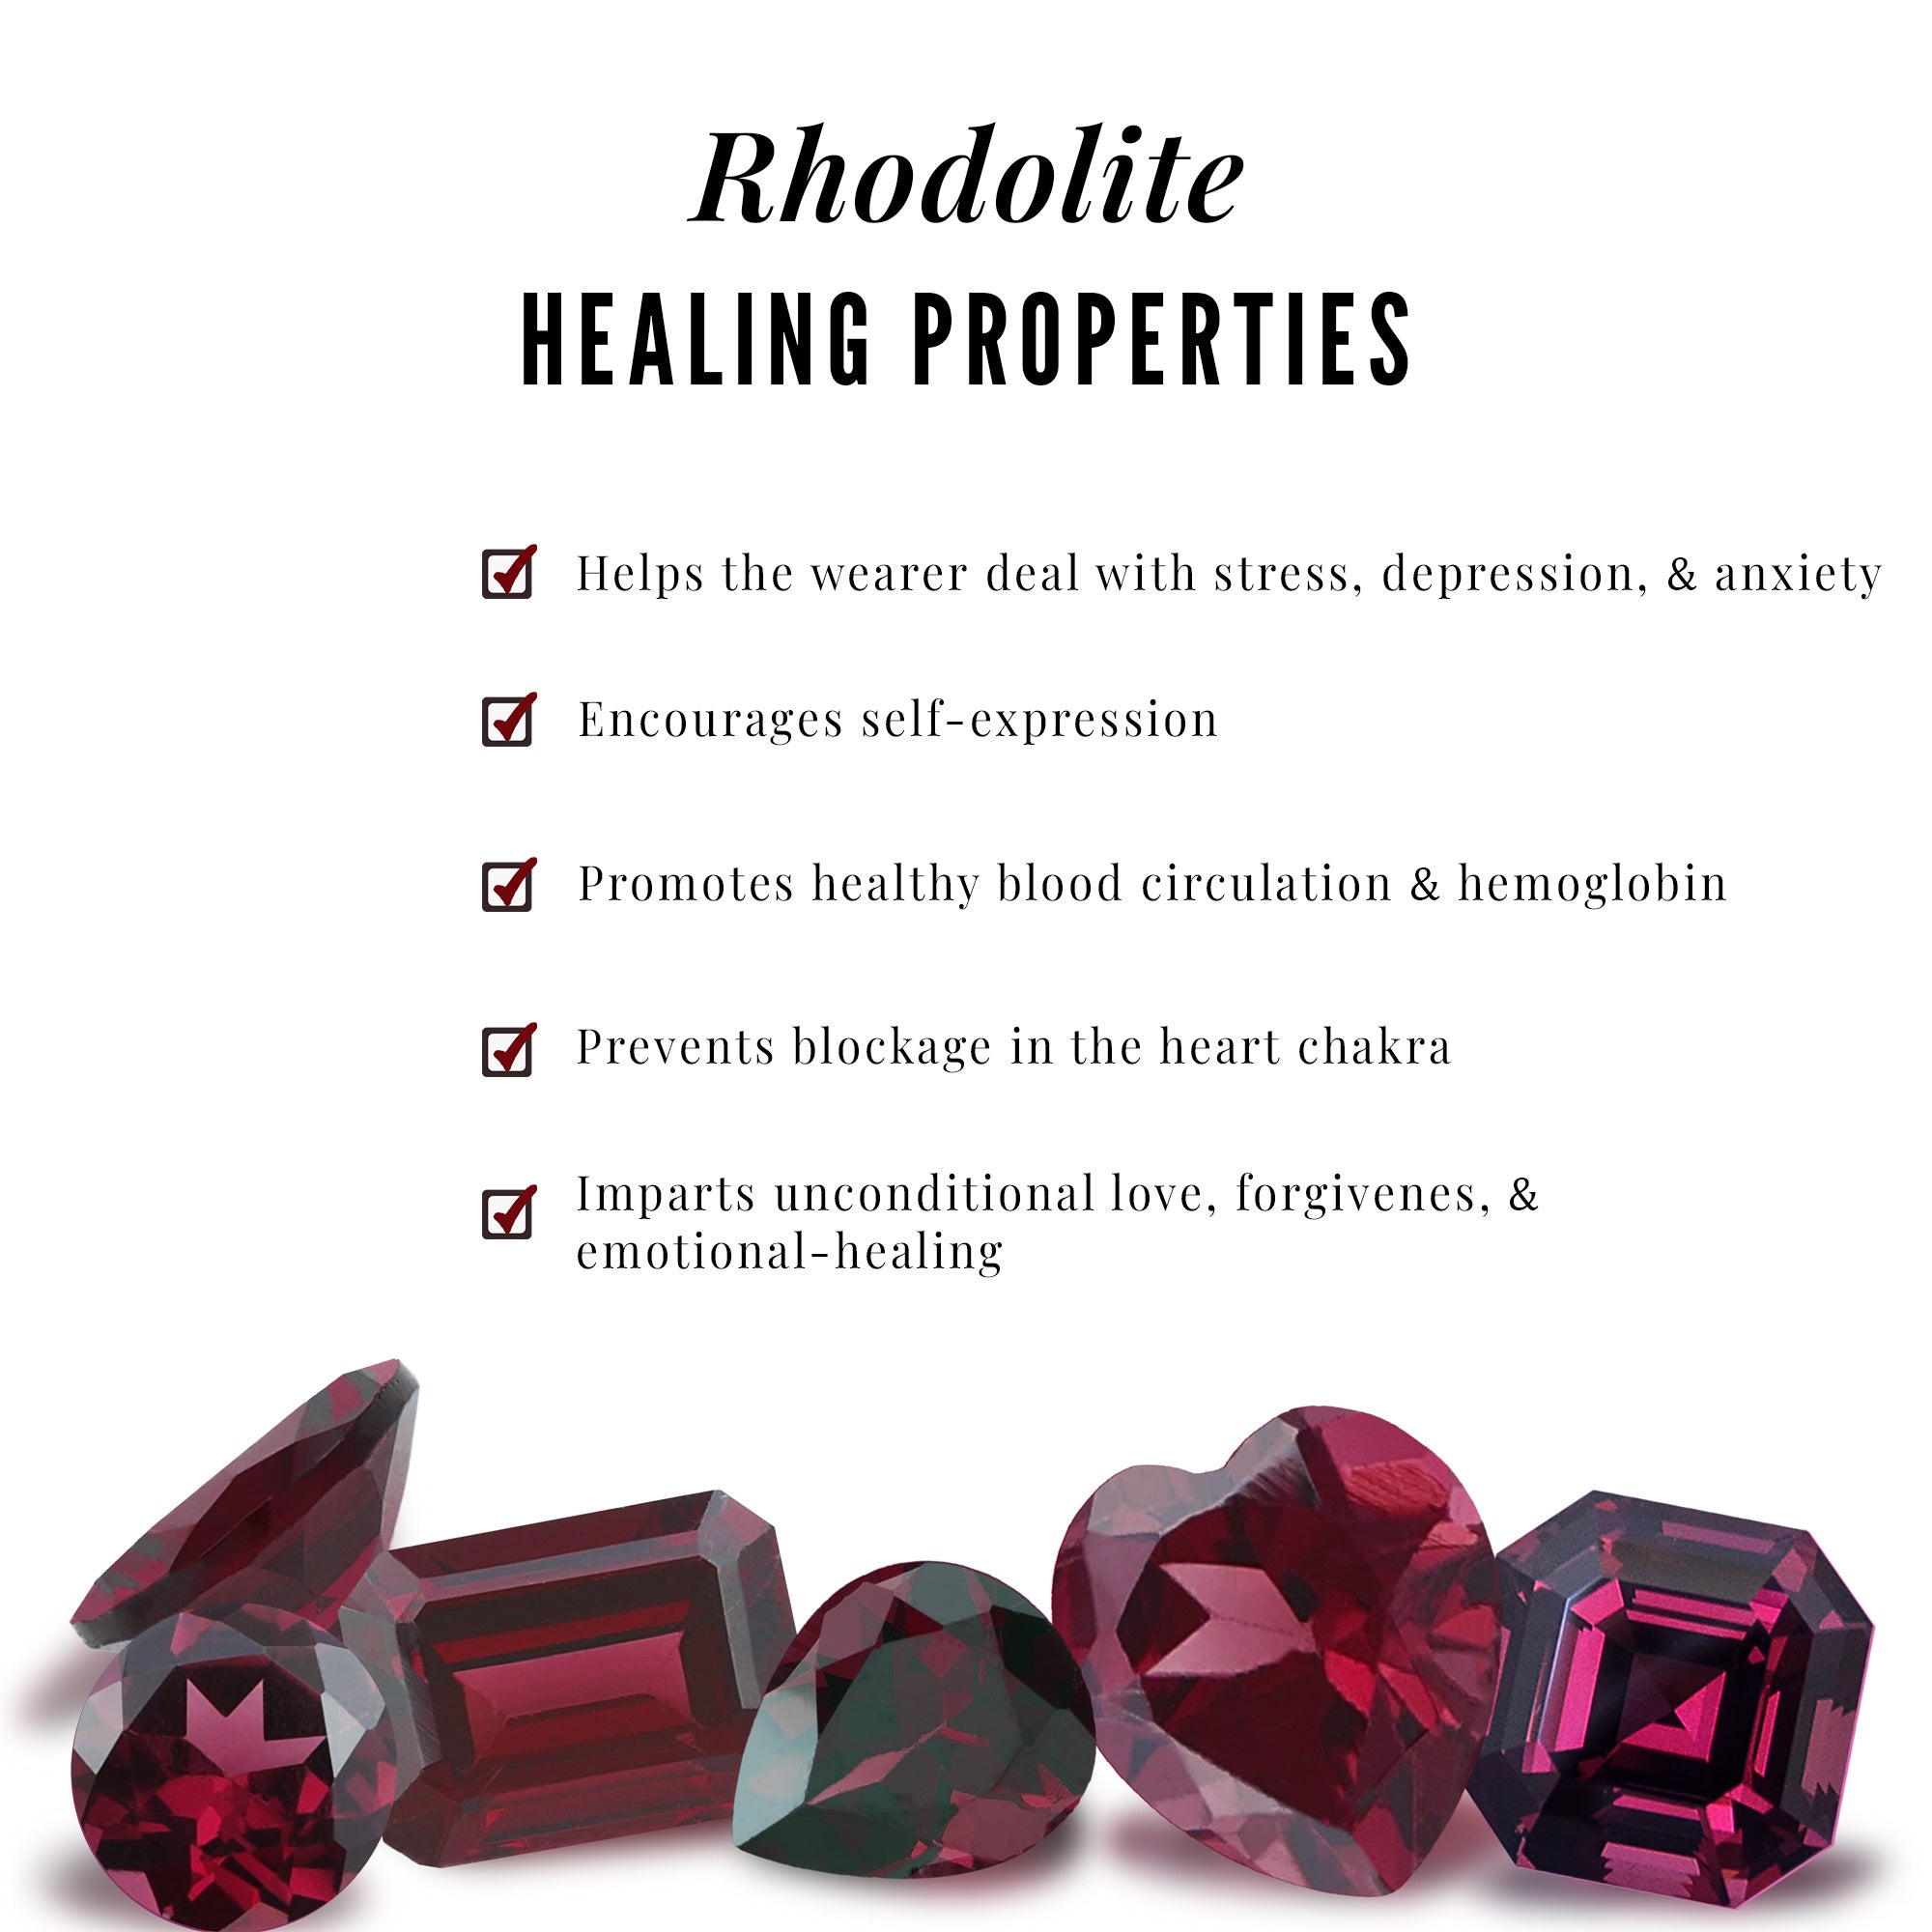 Rhodolite Garnet Pendant Necklace with Diamond Halo Rhodolite - ( AAA ) - Quality - Rosec Jewels